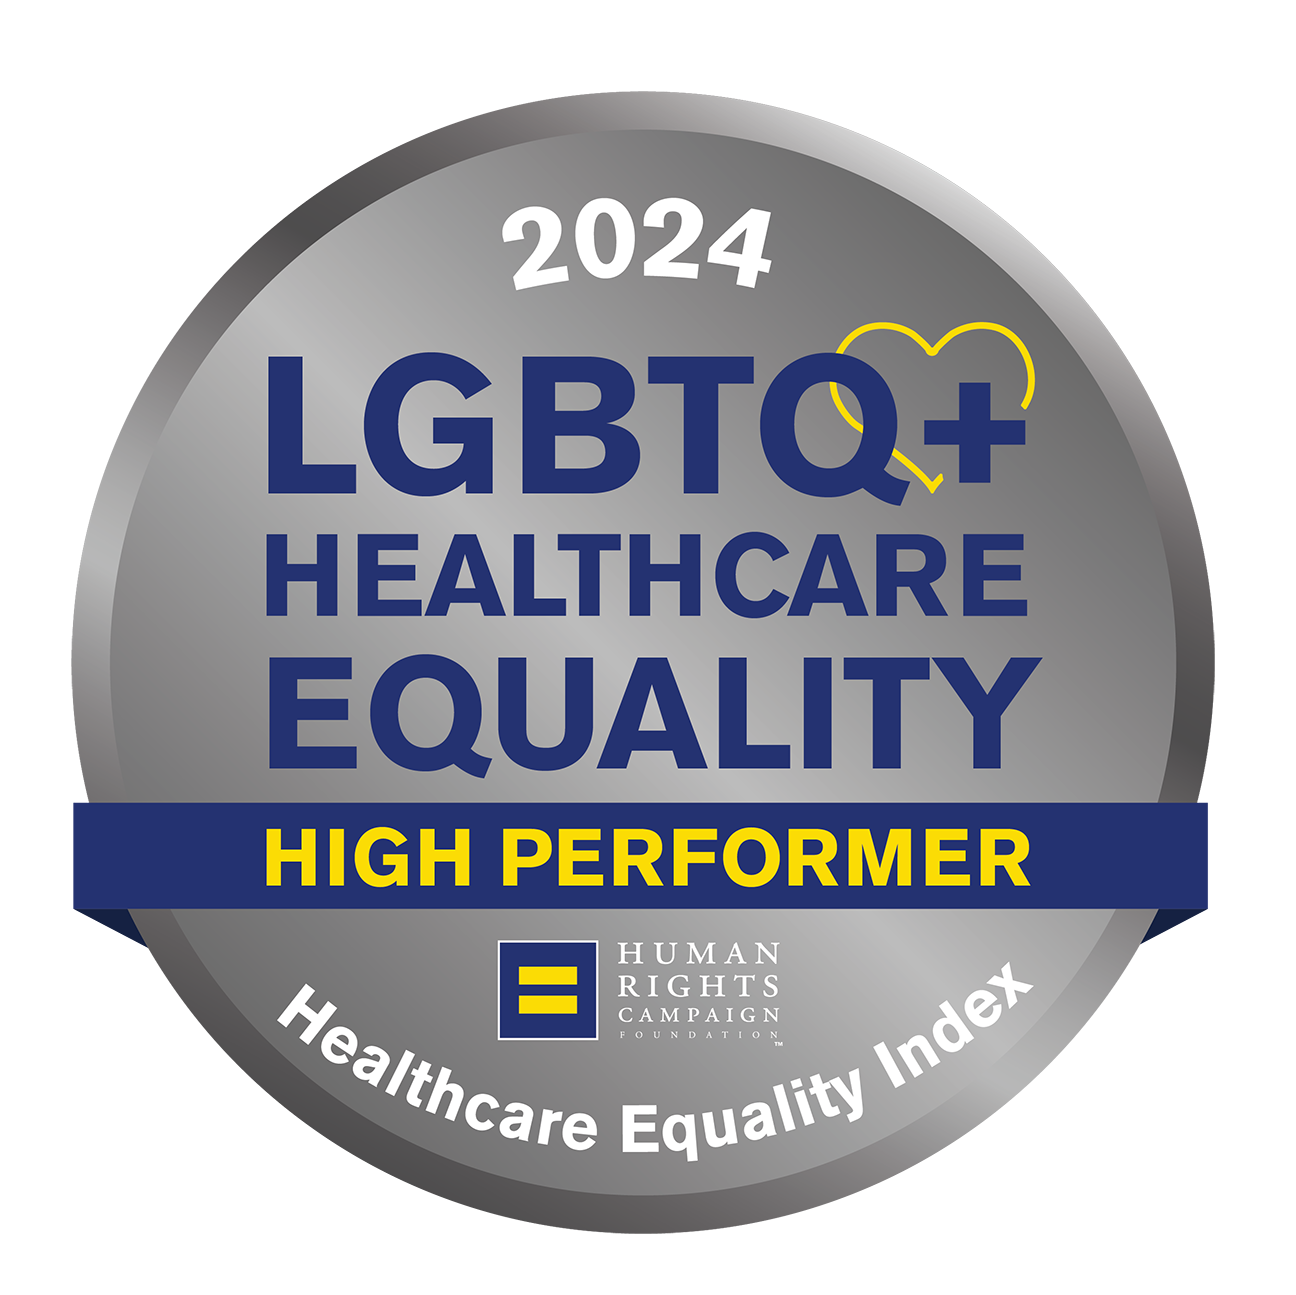 LGBTQ healthcare equality high performer logo 2024